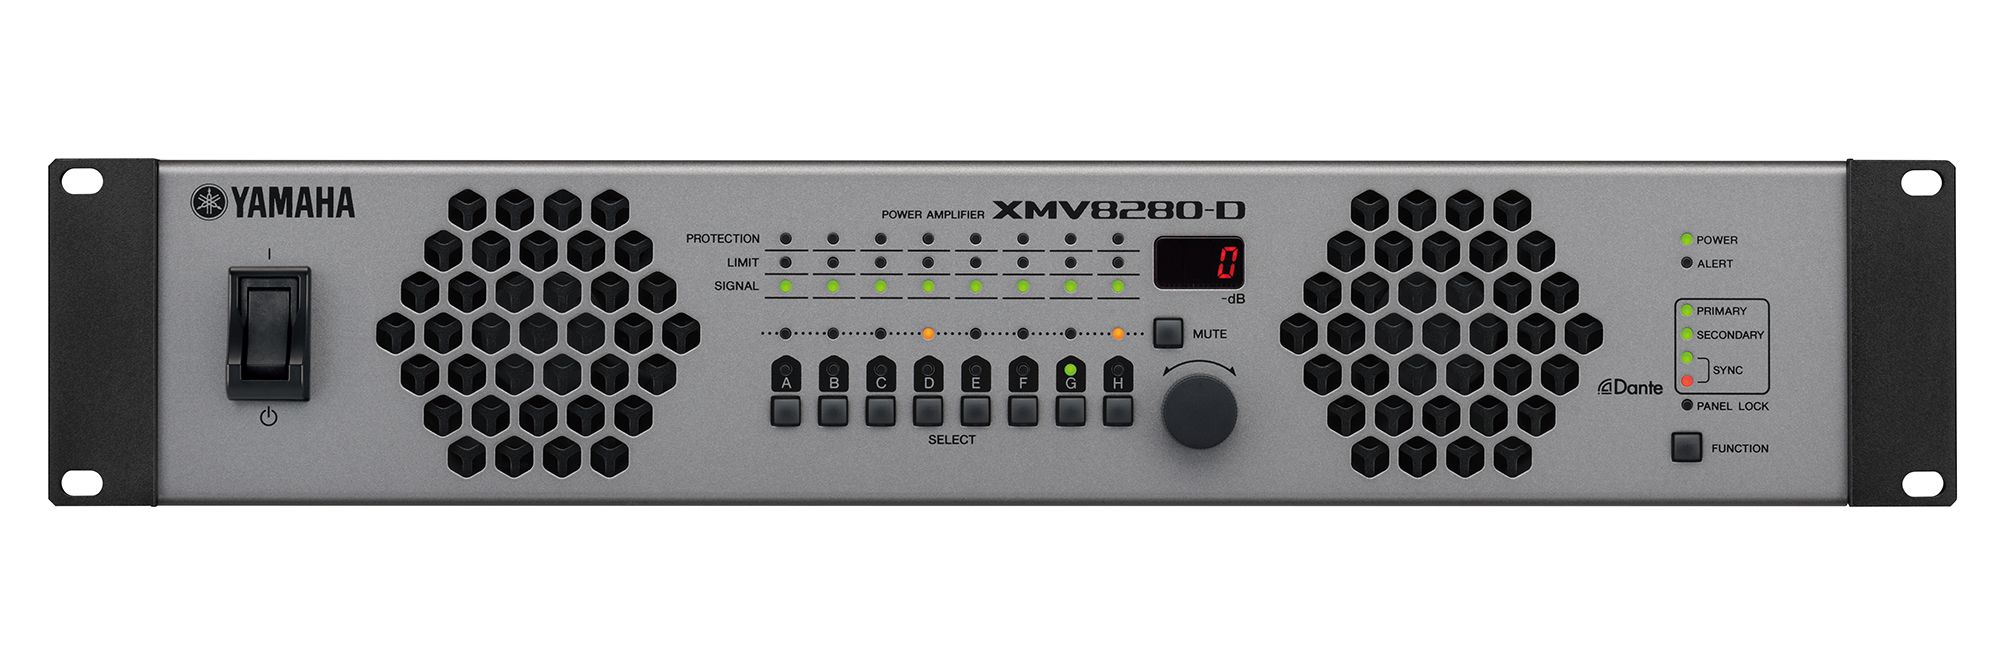 Yamaha XMV8280-D Power Amplifier